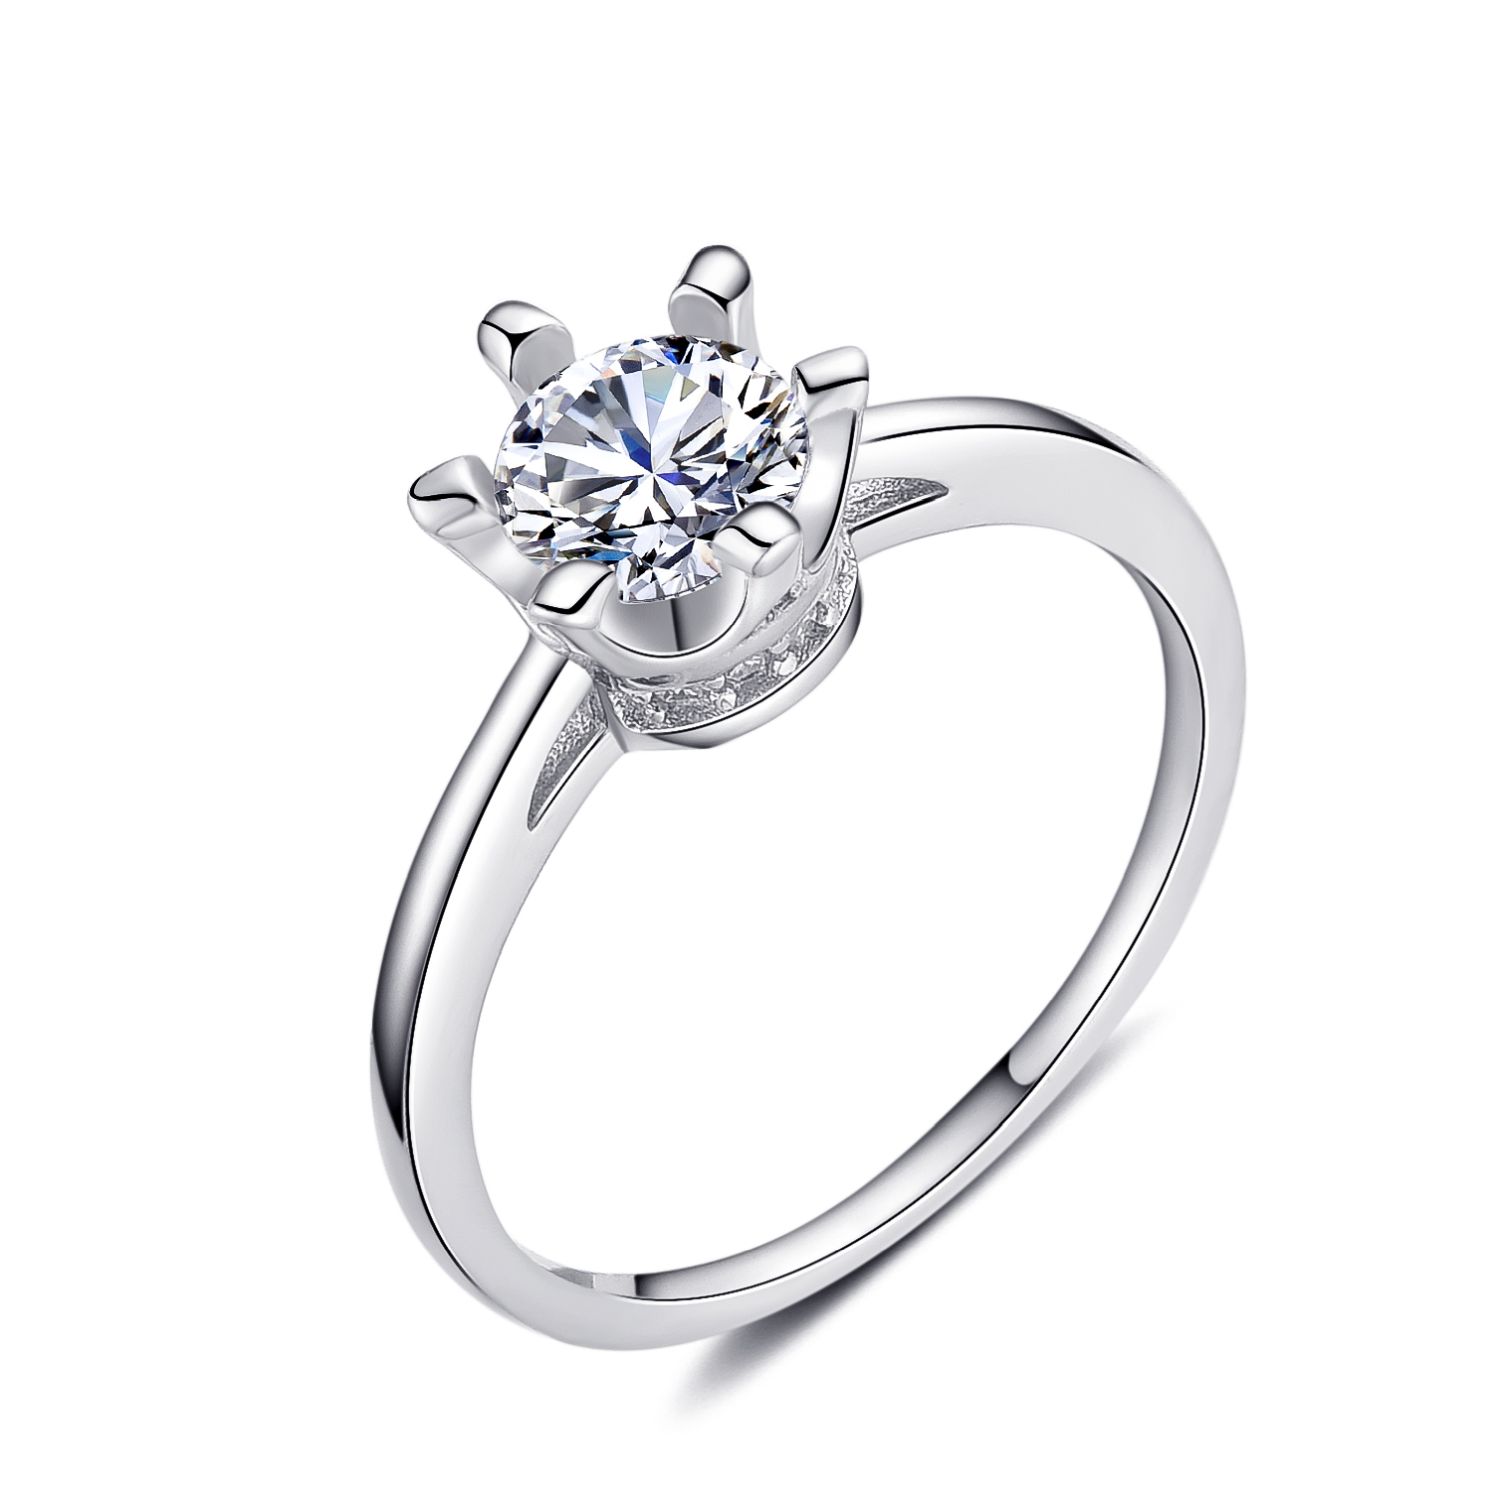 MOISS Moiss stříbrný prsten KORUNKA R0000546 Velikost 57 mm R0000550